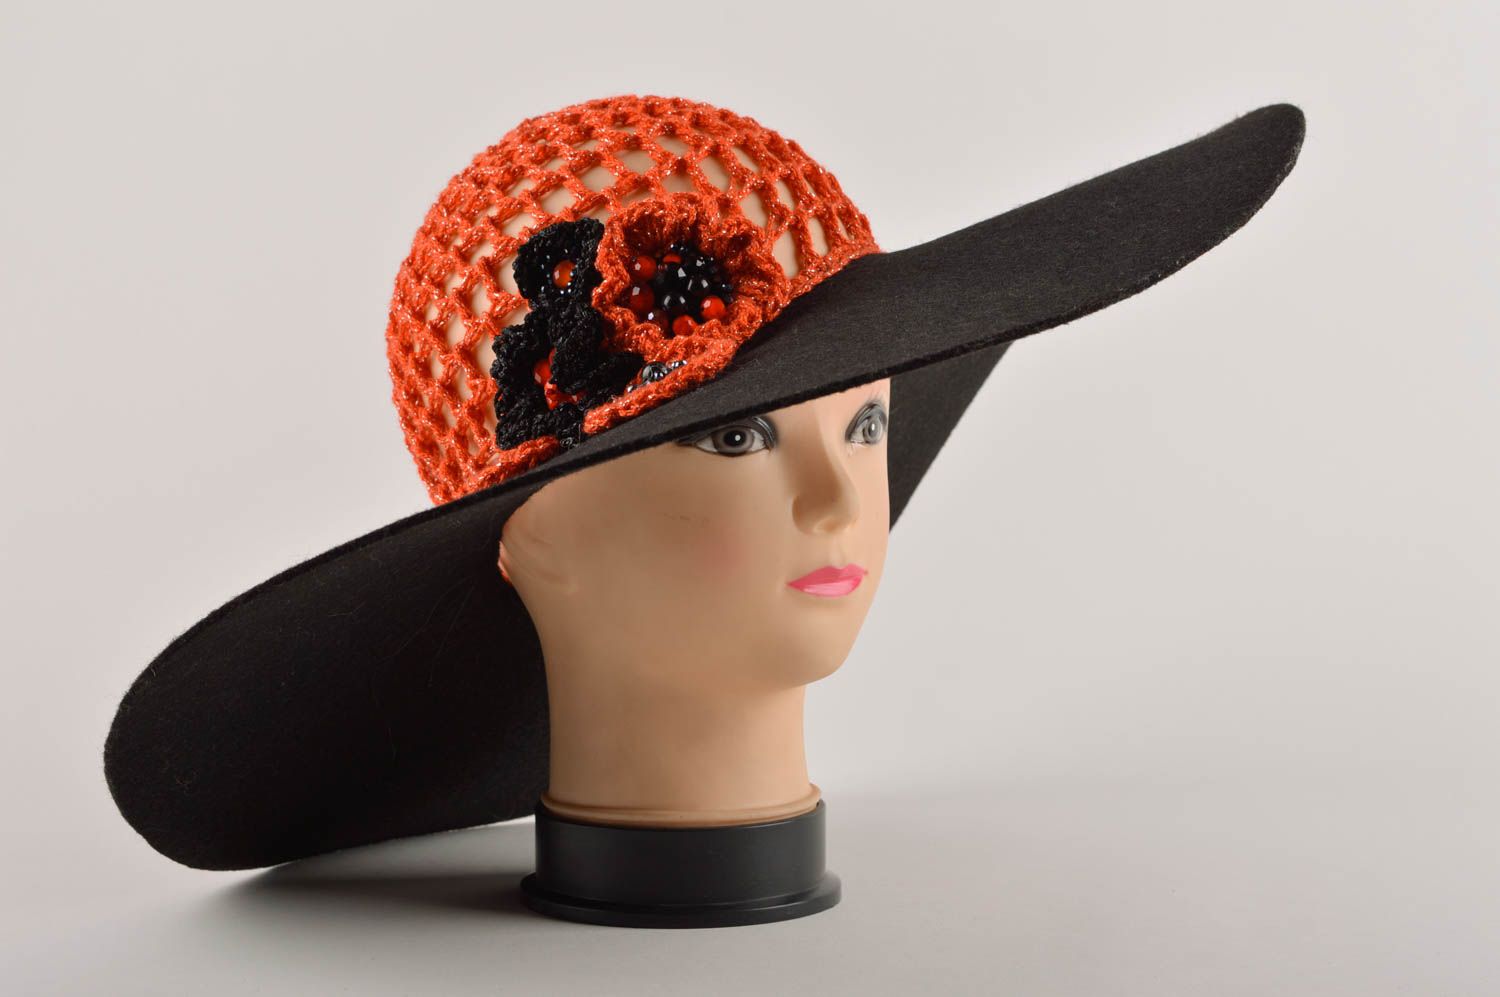 Handmade designer hat designer hat for women fashion accessories gifts for girls photo 1